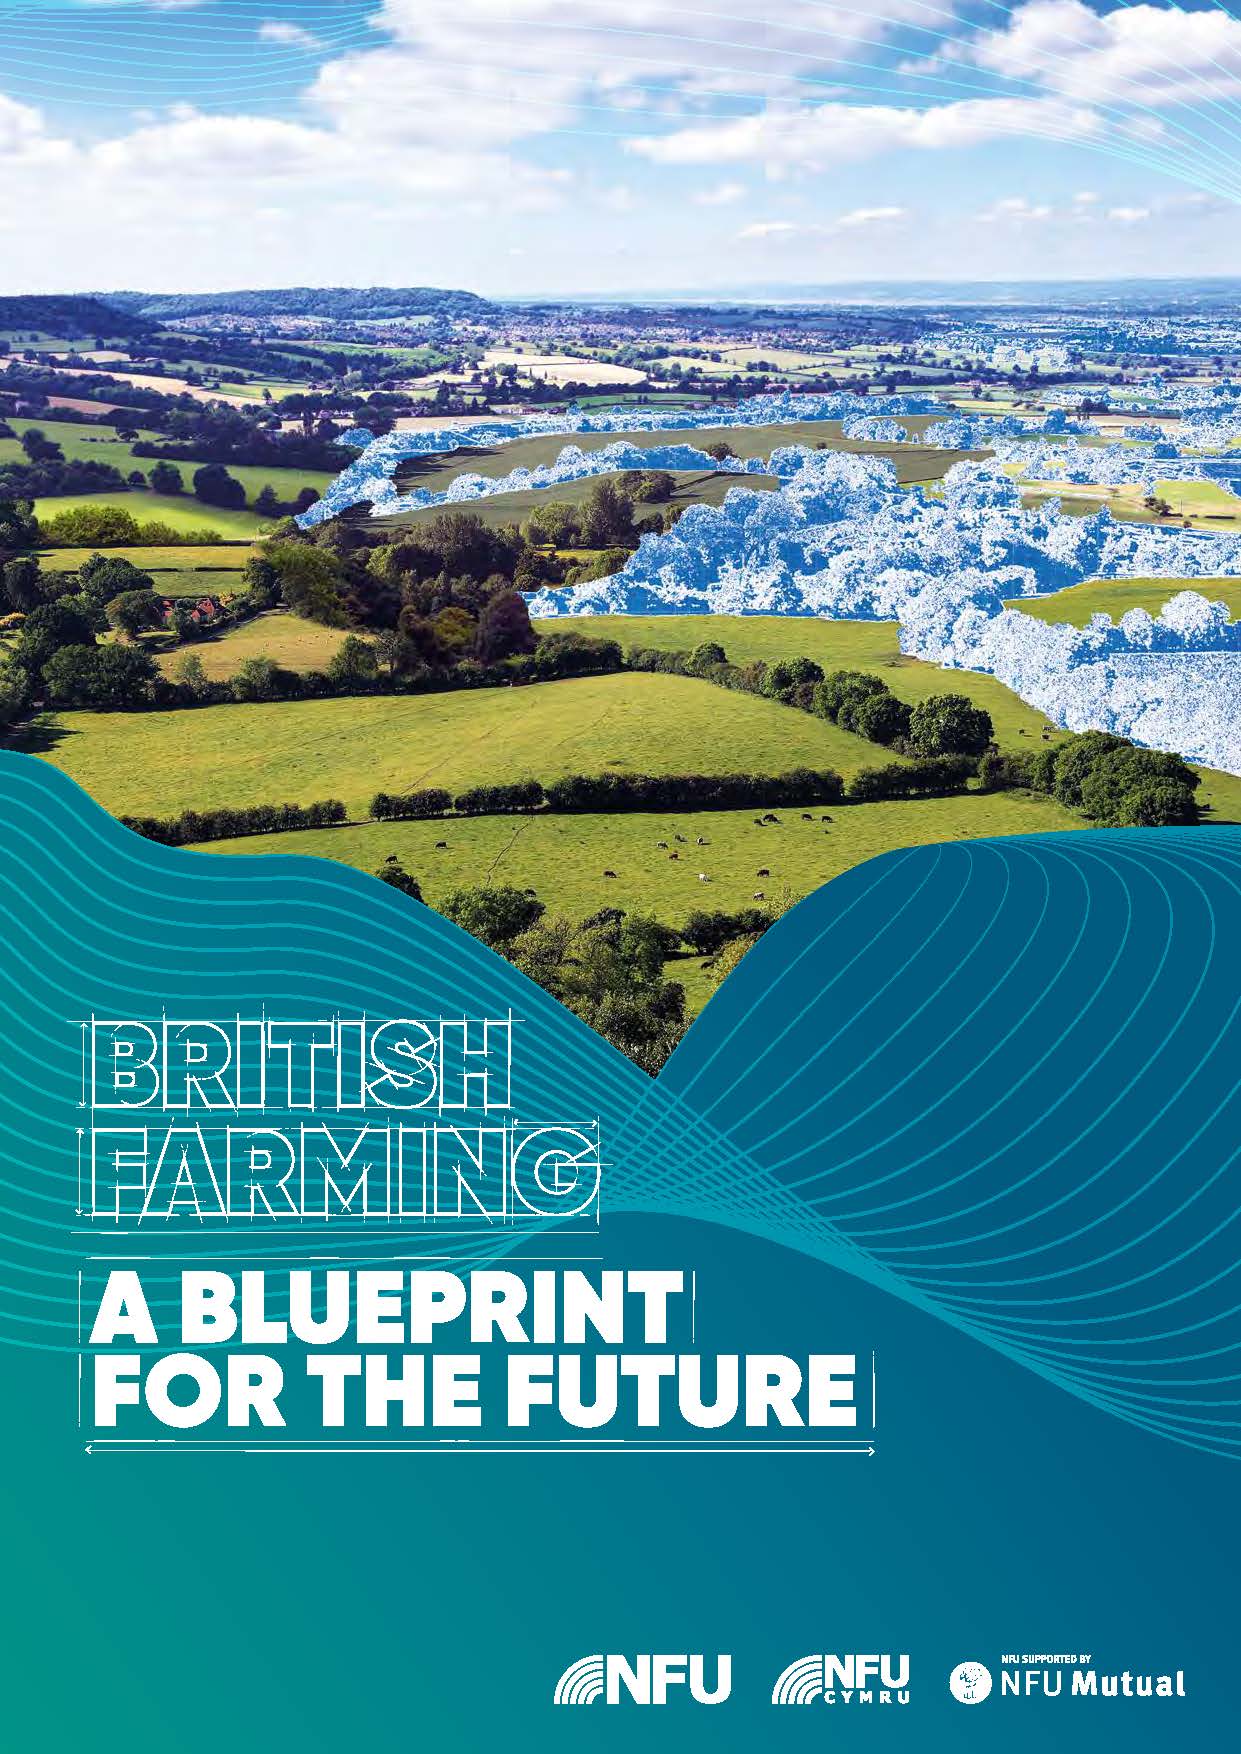 British farming: A Blueprint for the Future